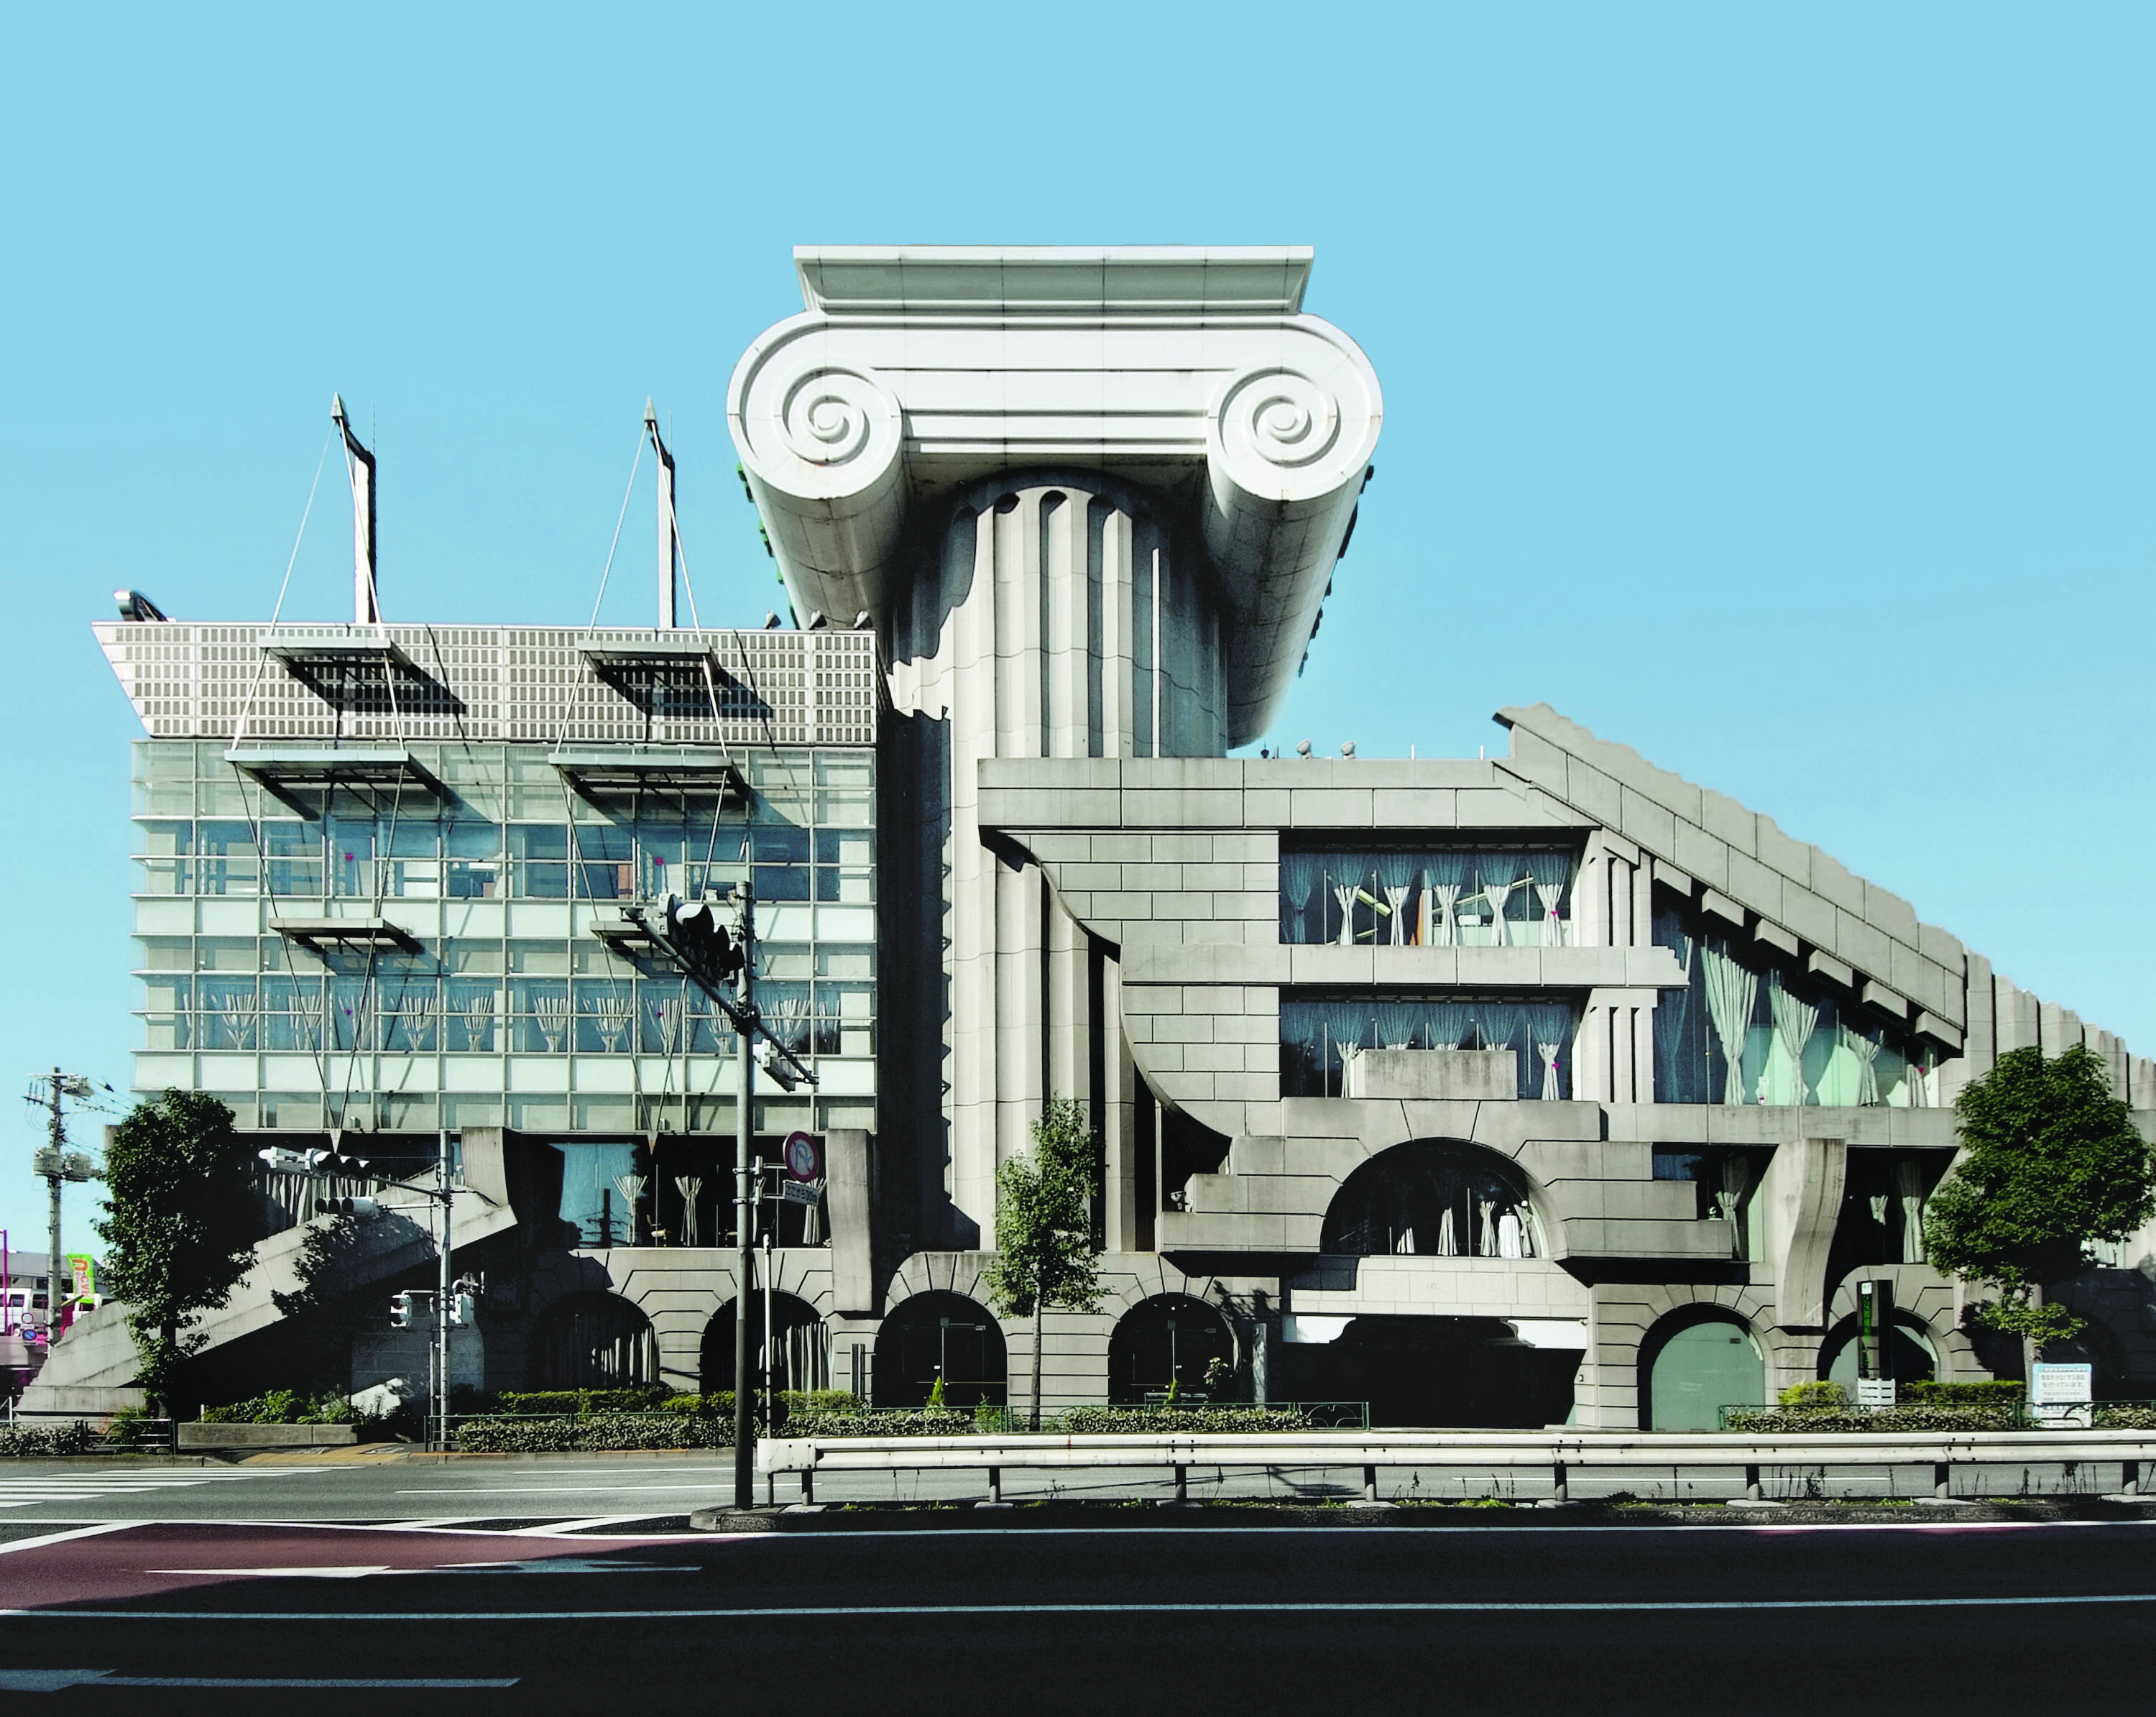 Phaidon's Architecture 100